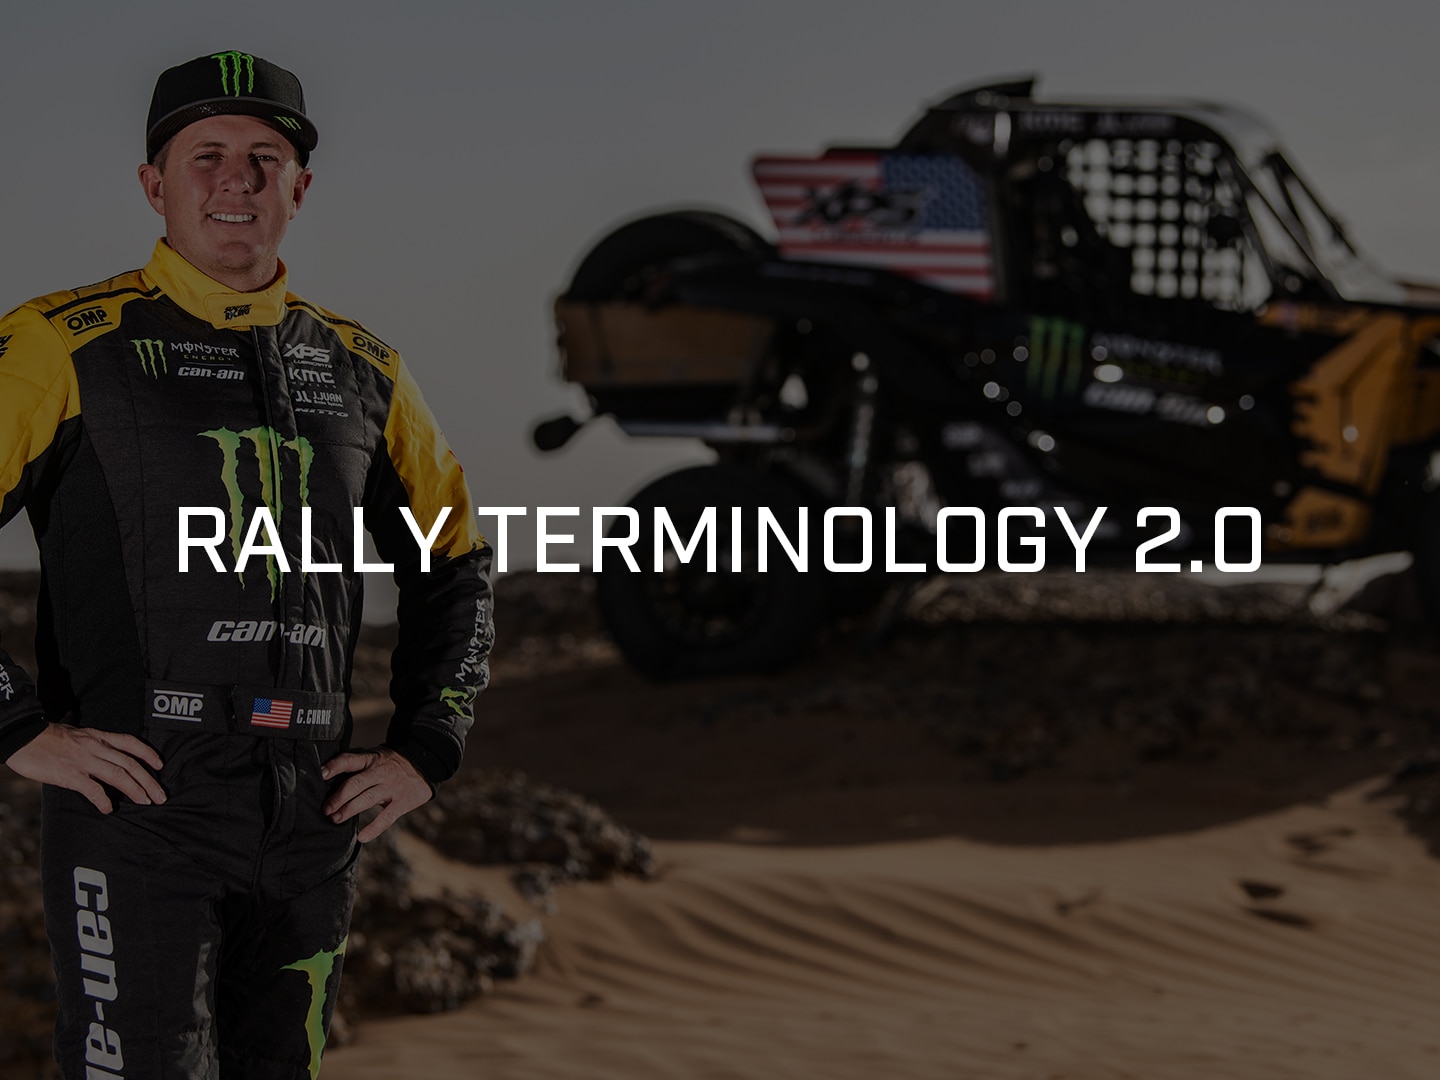 Rally terminology 2.0